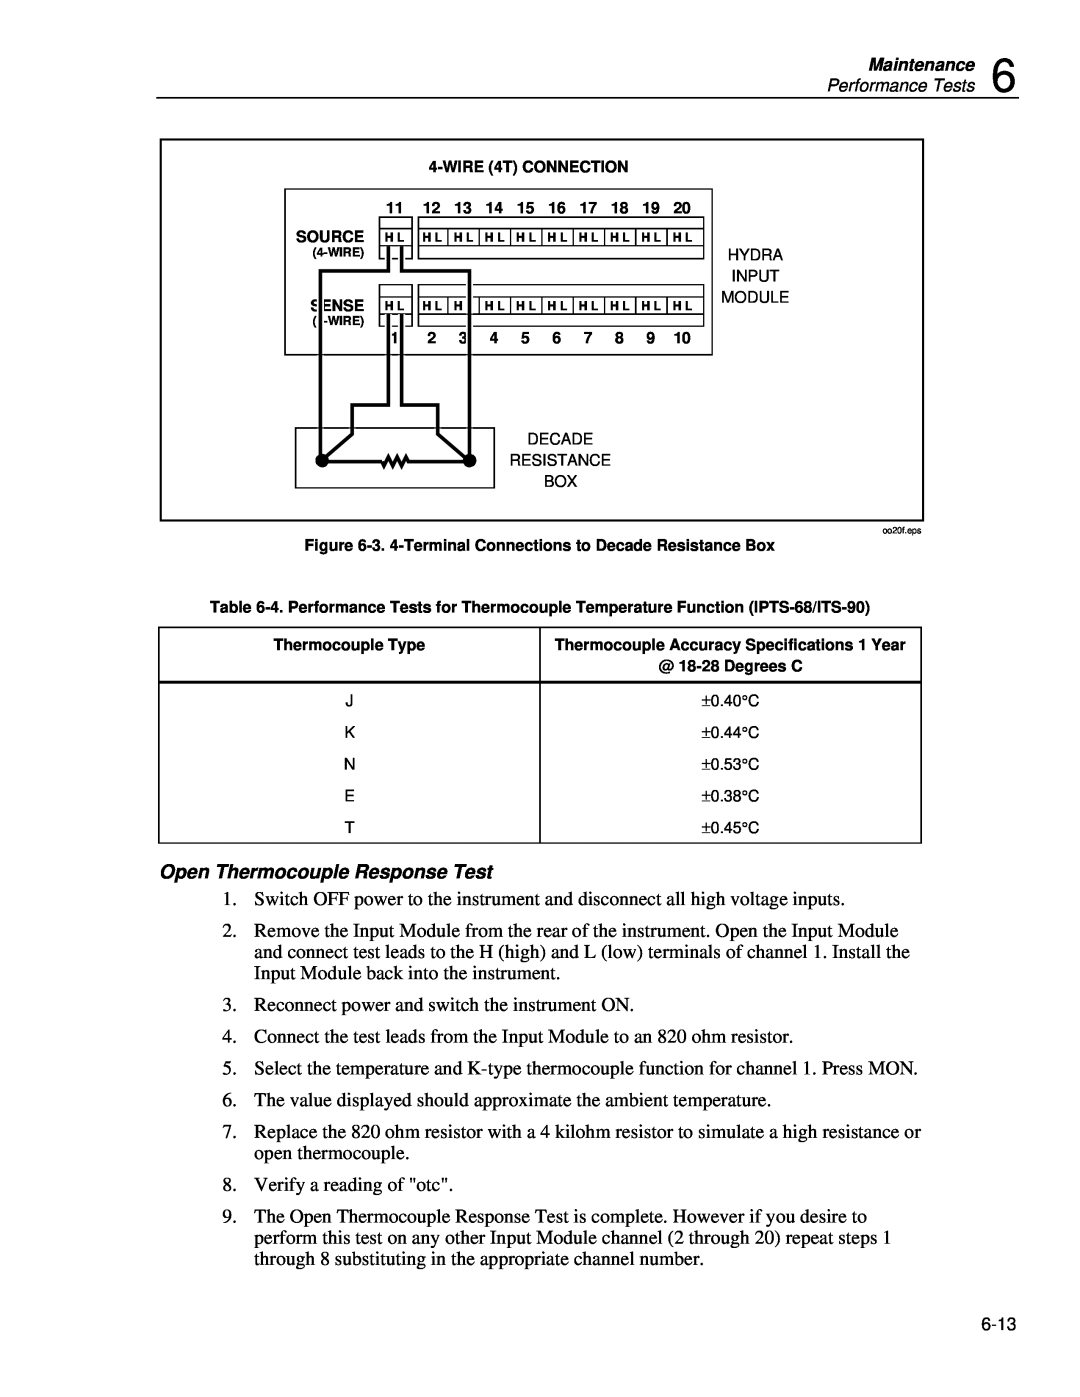 Fluke 2620A, 2625A user manual Open Thermocouple Response Test, Decade Resistance Box, Hydra Input Module, J K N E T 